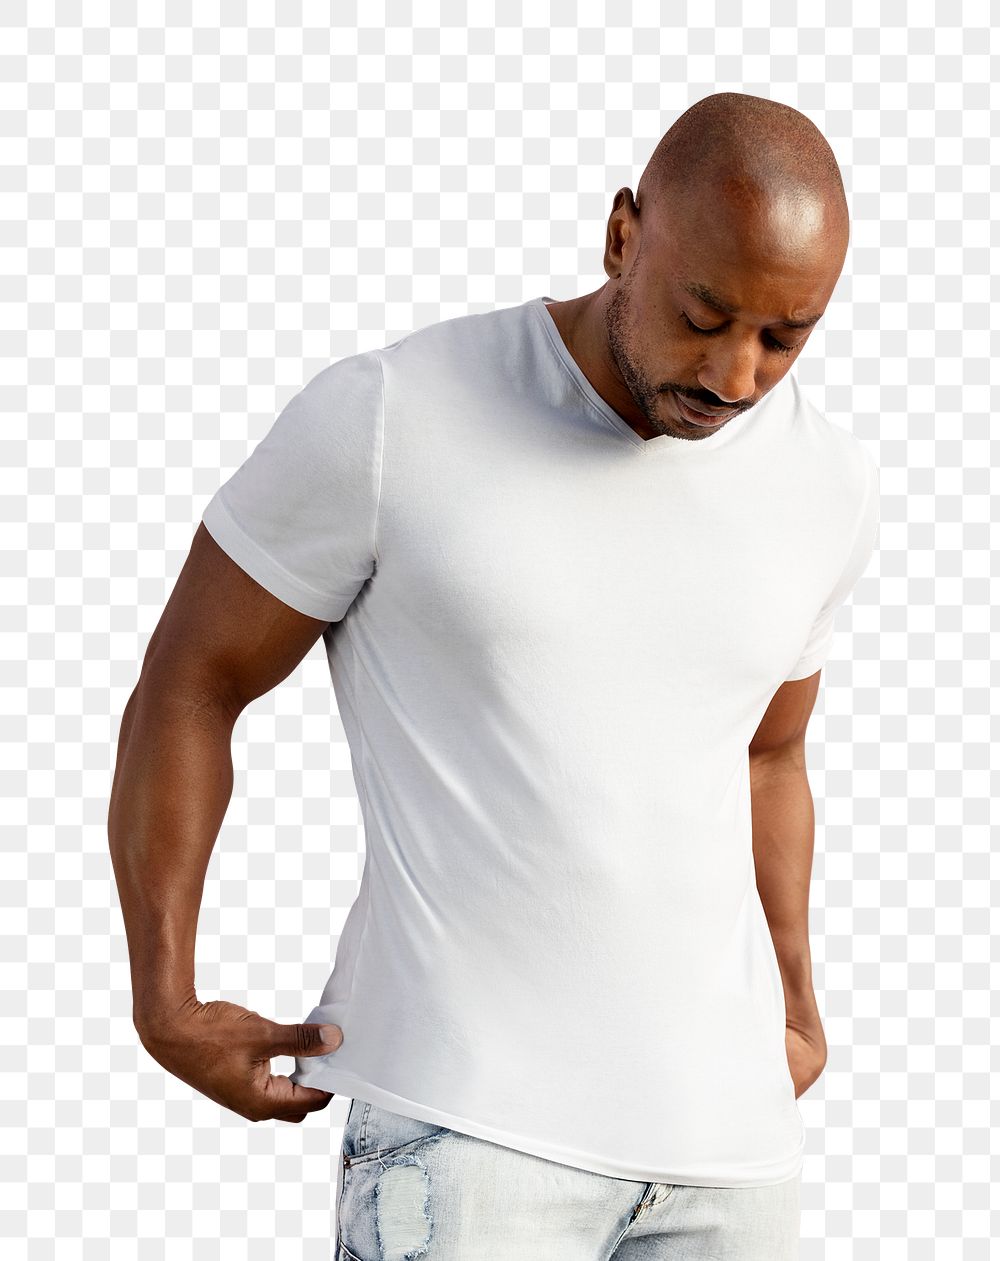 Man cut out png sticker, wearing white plain shirt, transparent background